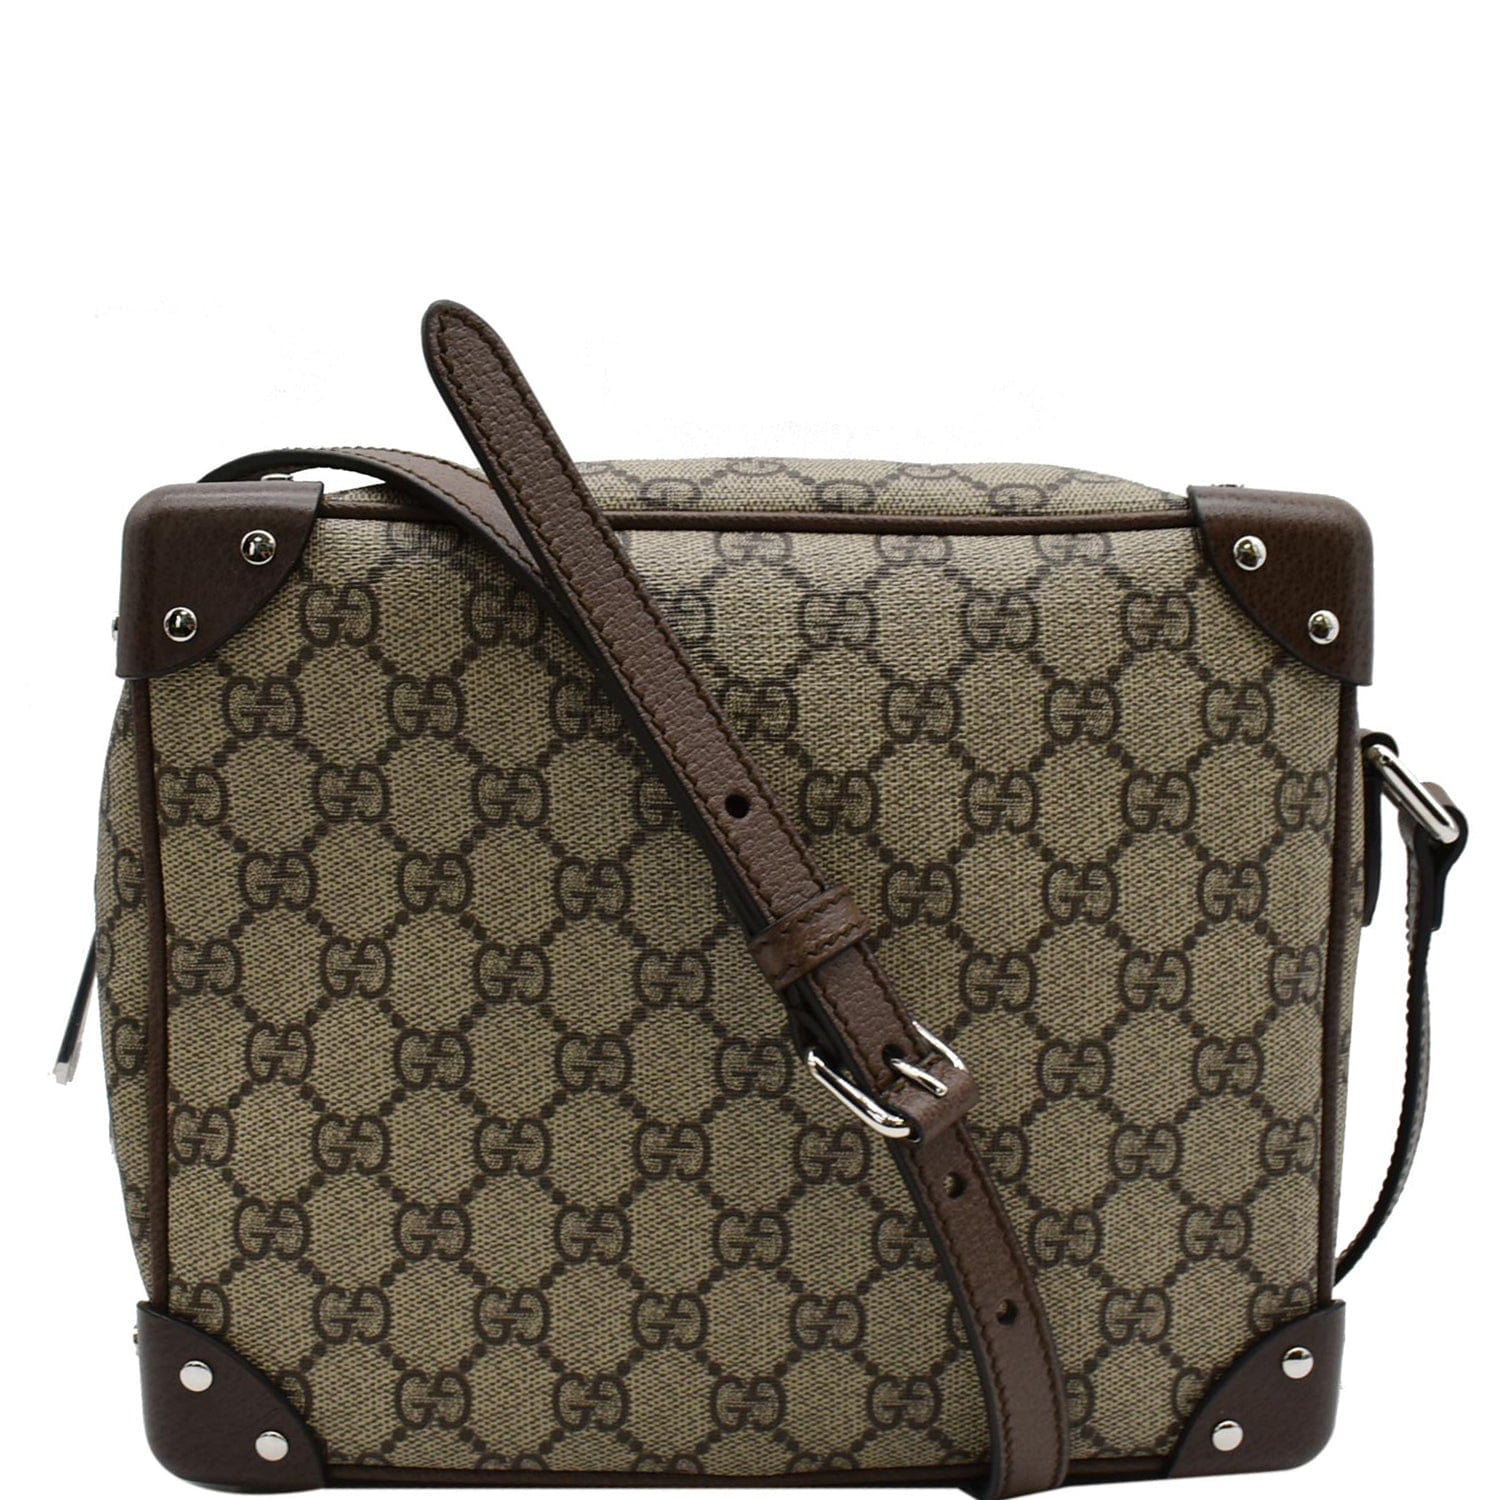 Gucci Suprême GG Shoulder Bag in Beige Monogram Canvas and Brown